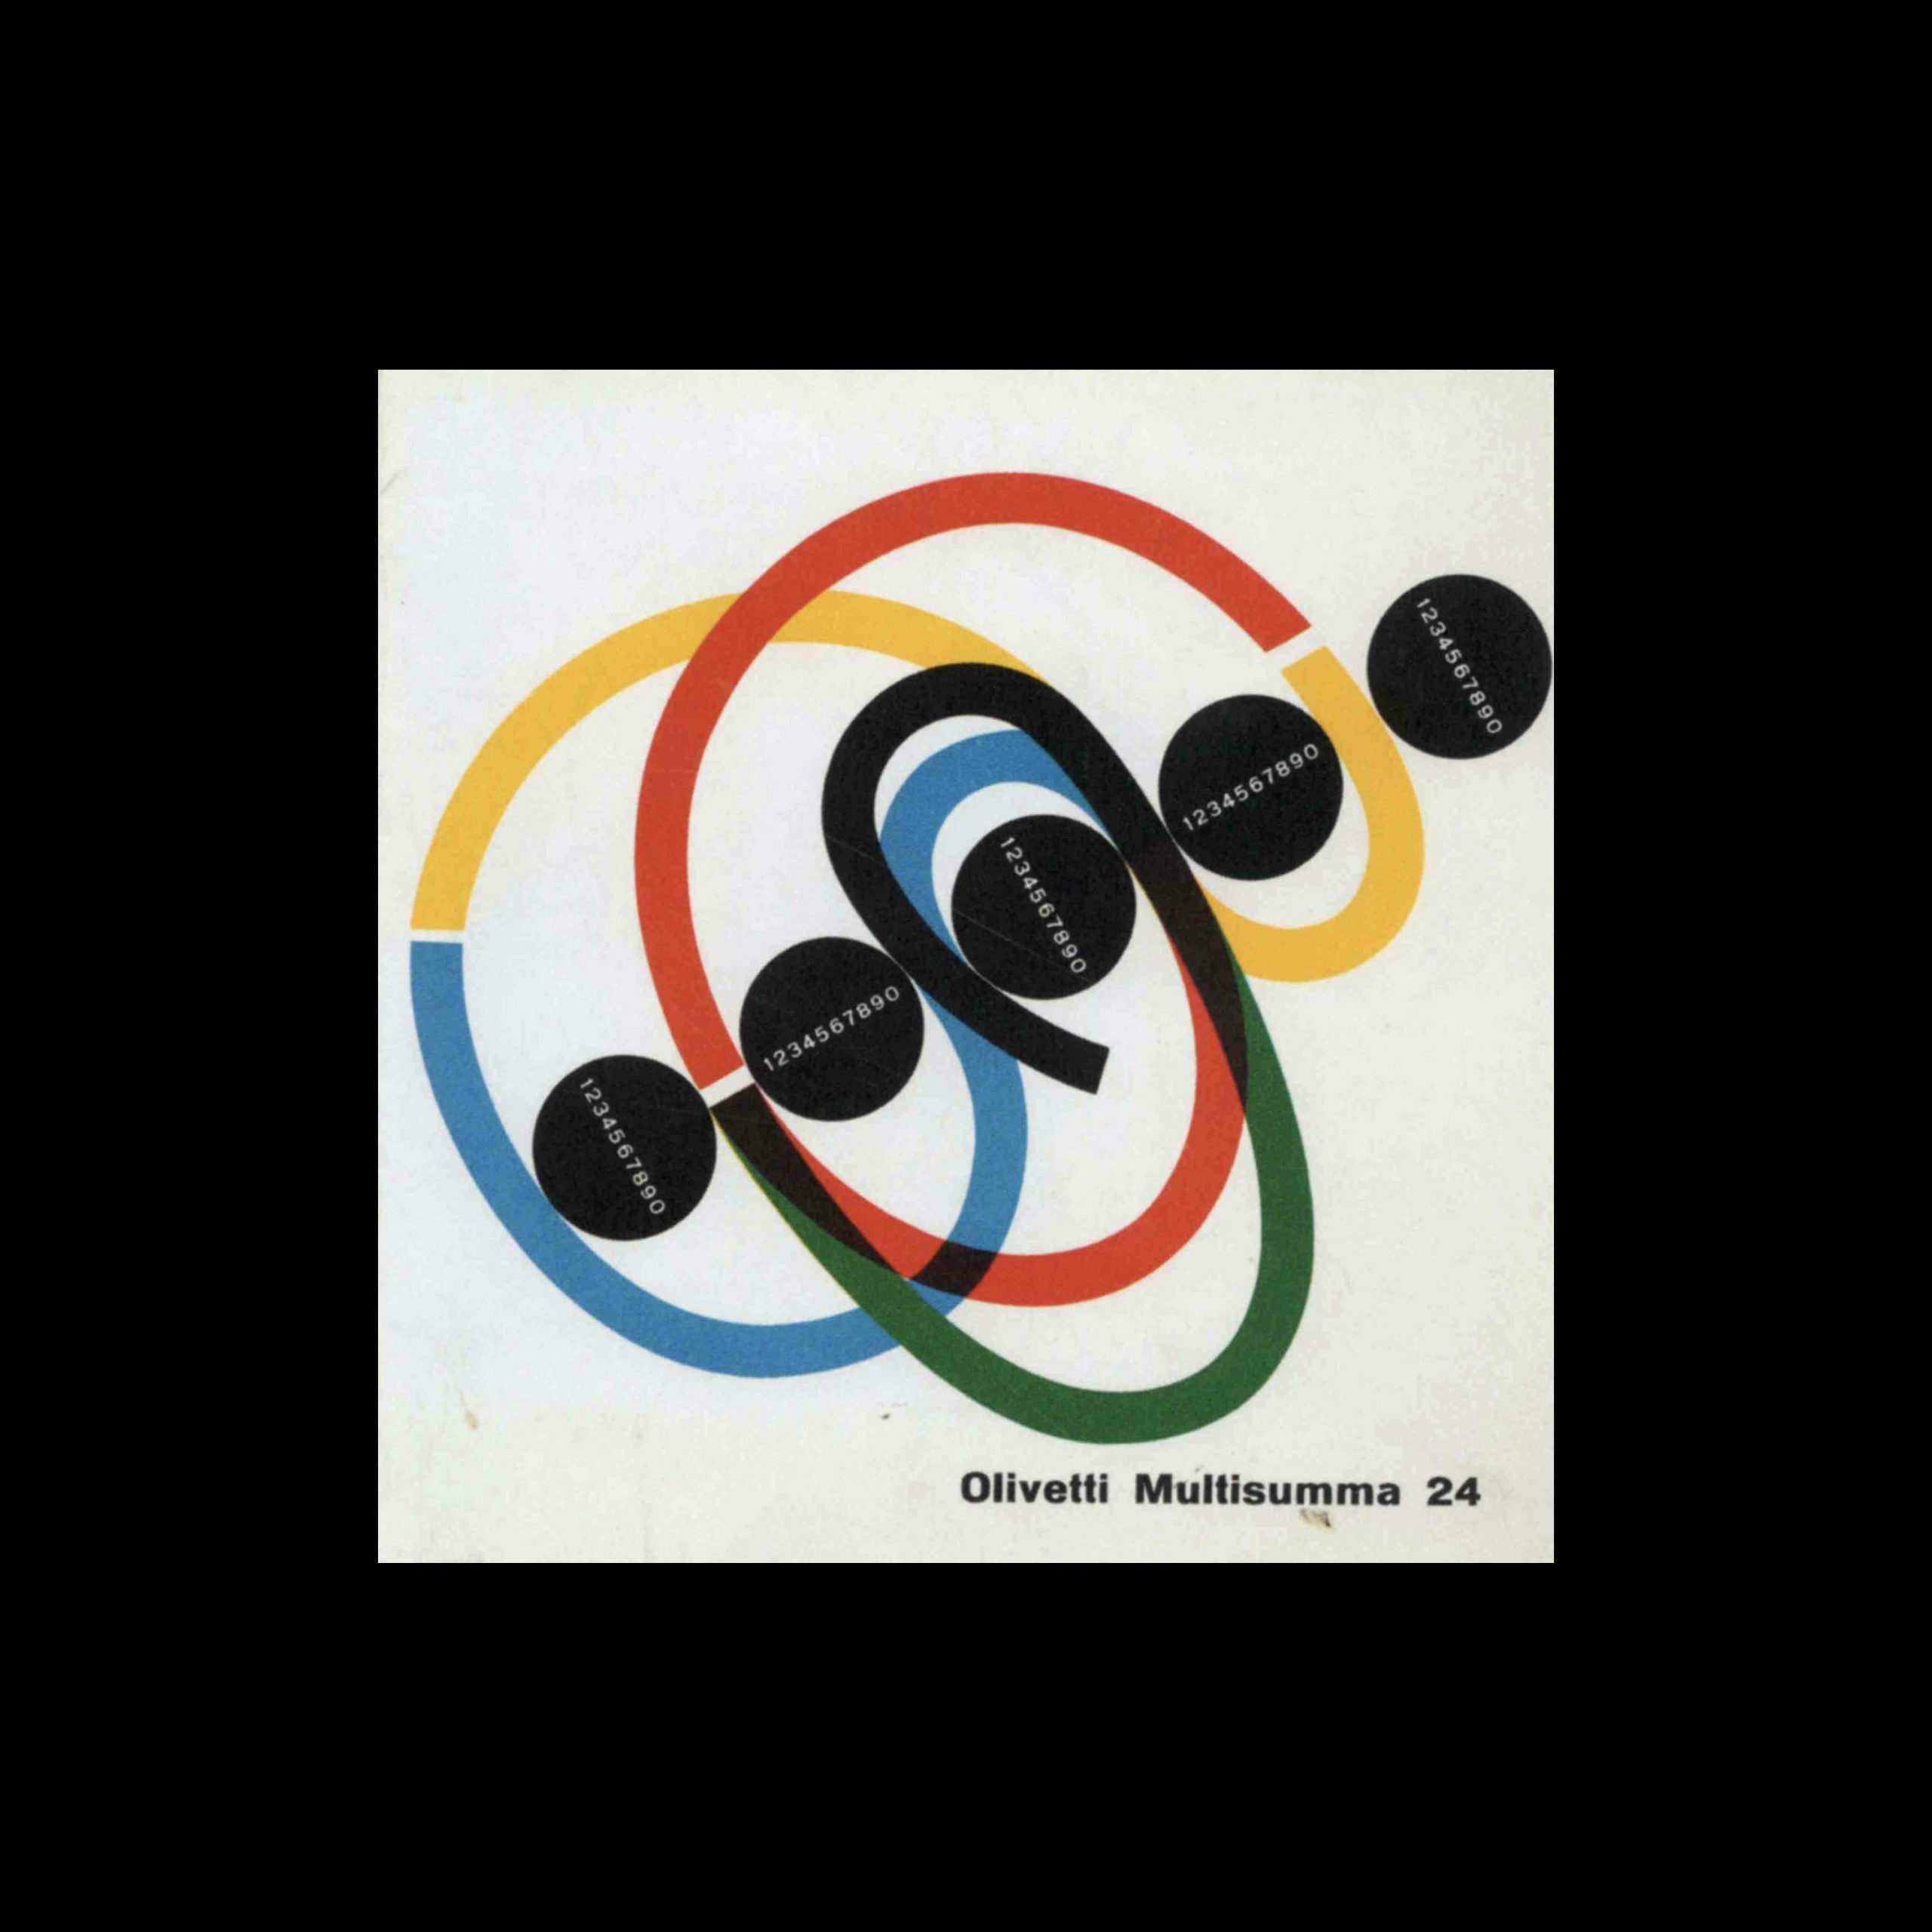 Olivetti Muitsumma 20, cover flyer, 1966, designed by Giovanni Pintori. Scanned from Giovanni Pintori, Moleskine Books, 2015